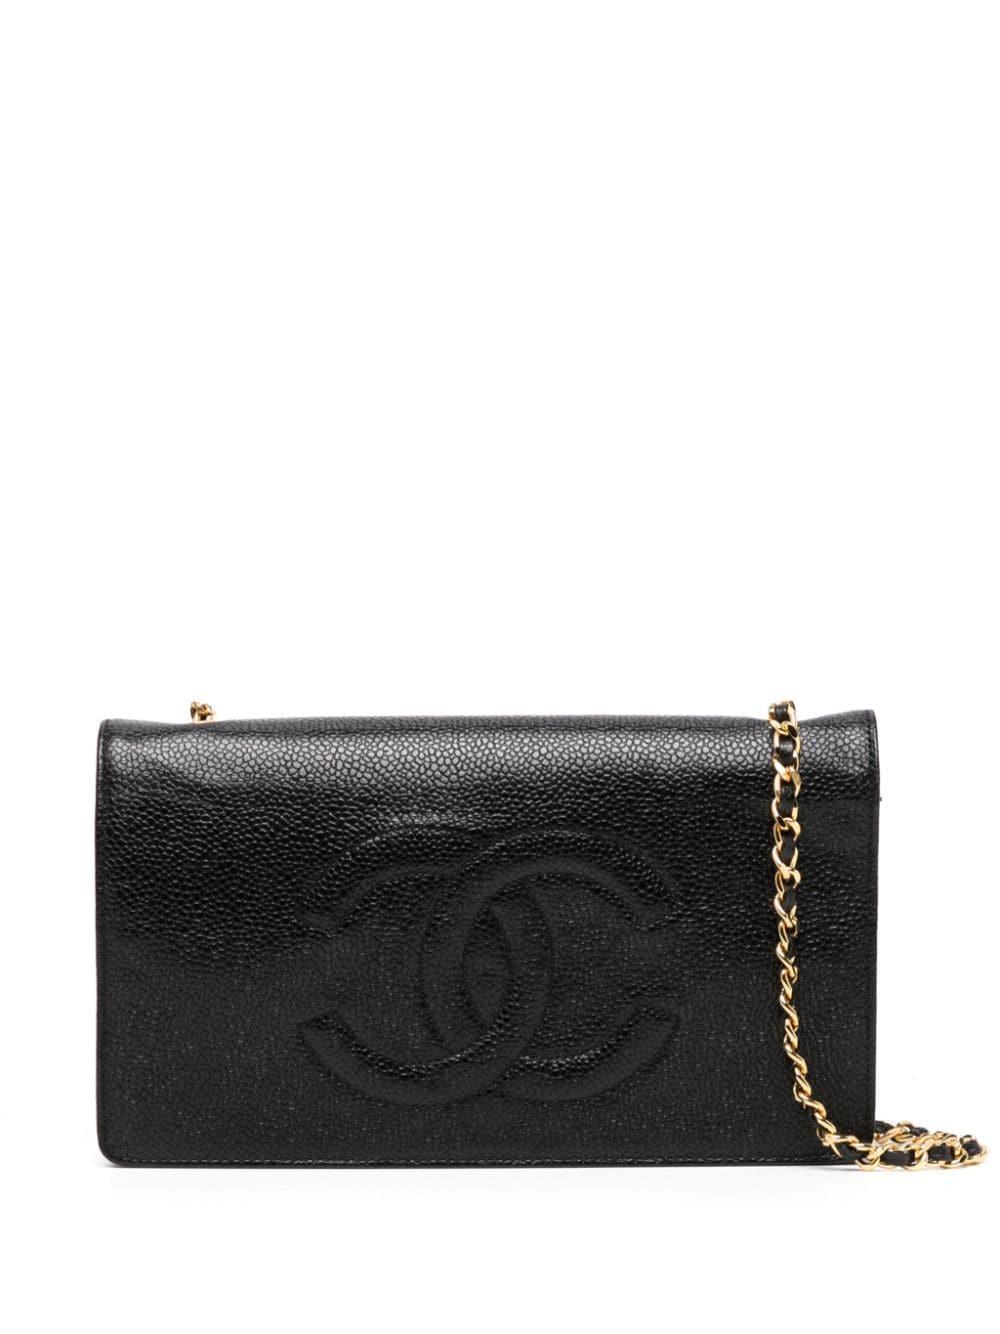 Chanel 1996 Vintage Woc Brieftasche an Kette Cross Body Bag aus schwarzem Kalbsleder